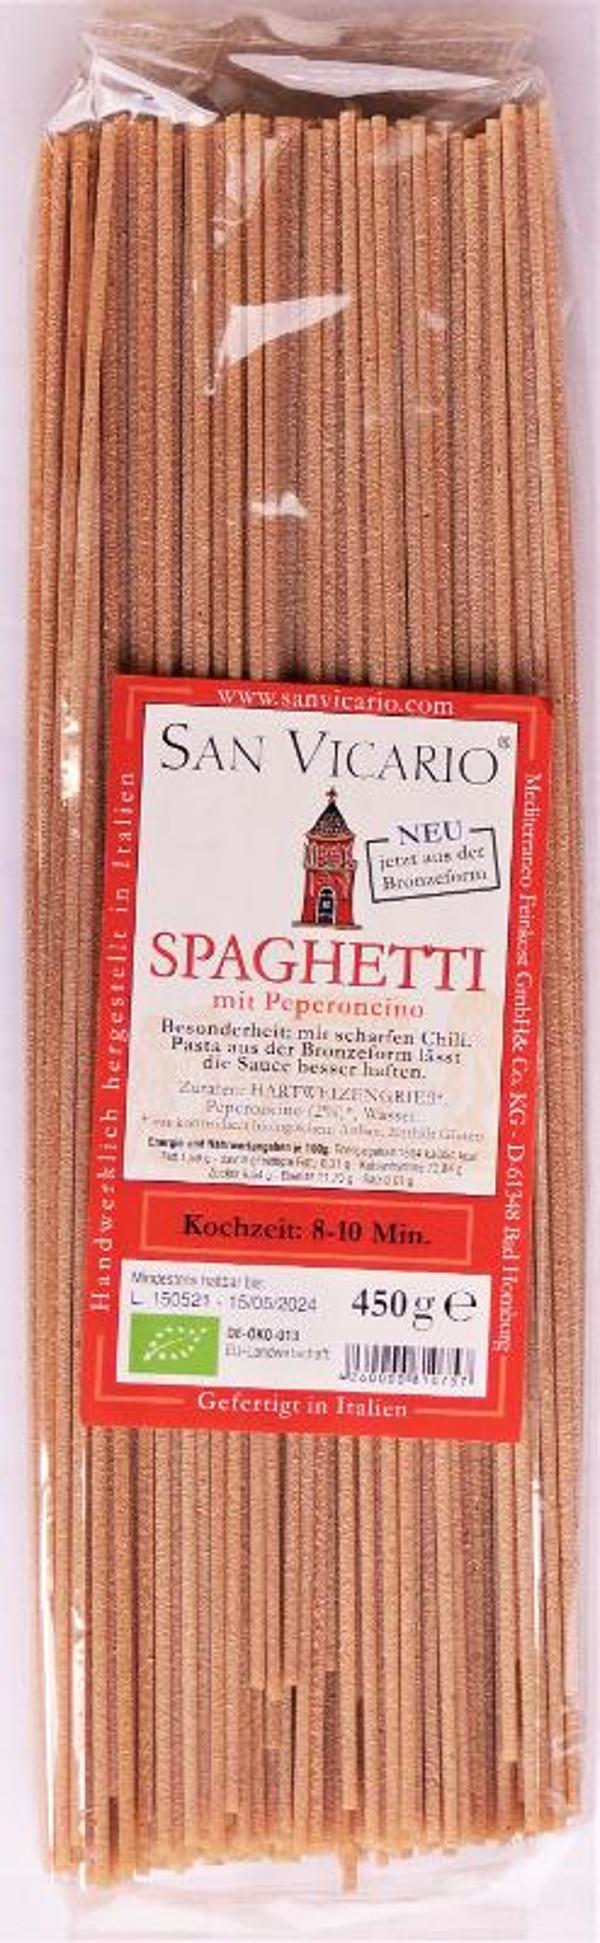 Produktfoto zu Spaghetti al bronzo mit Pepero